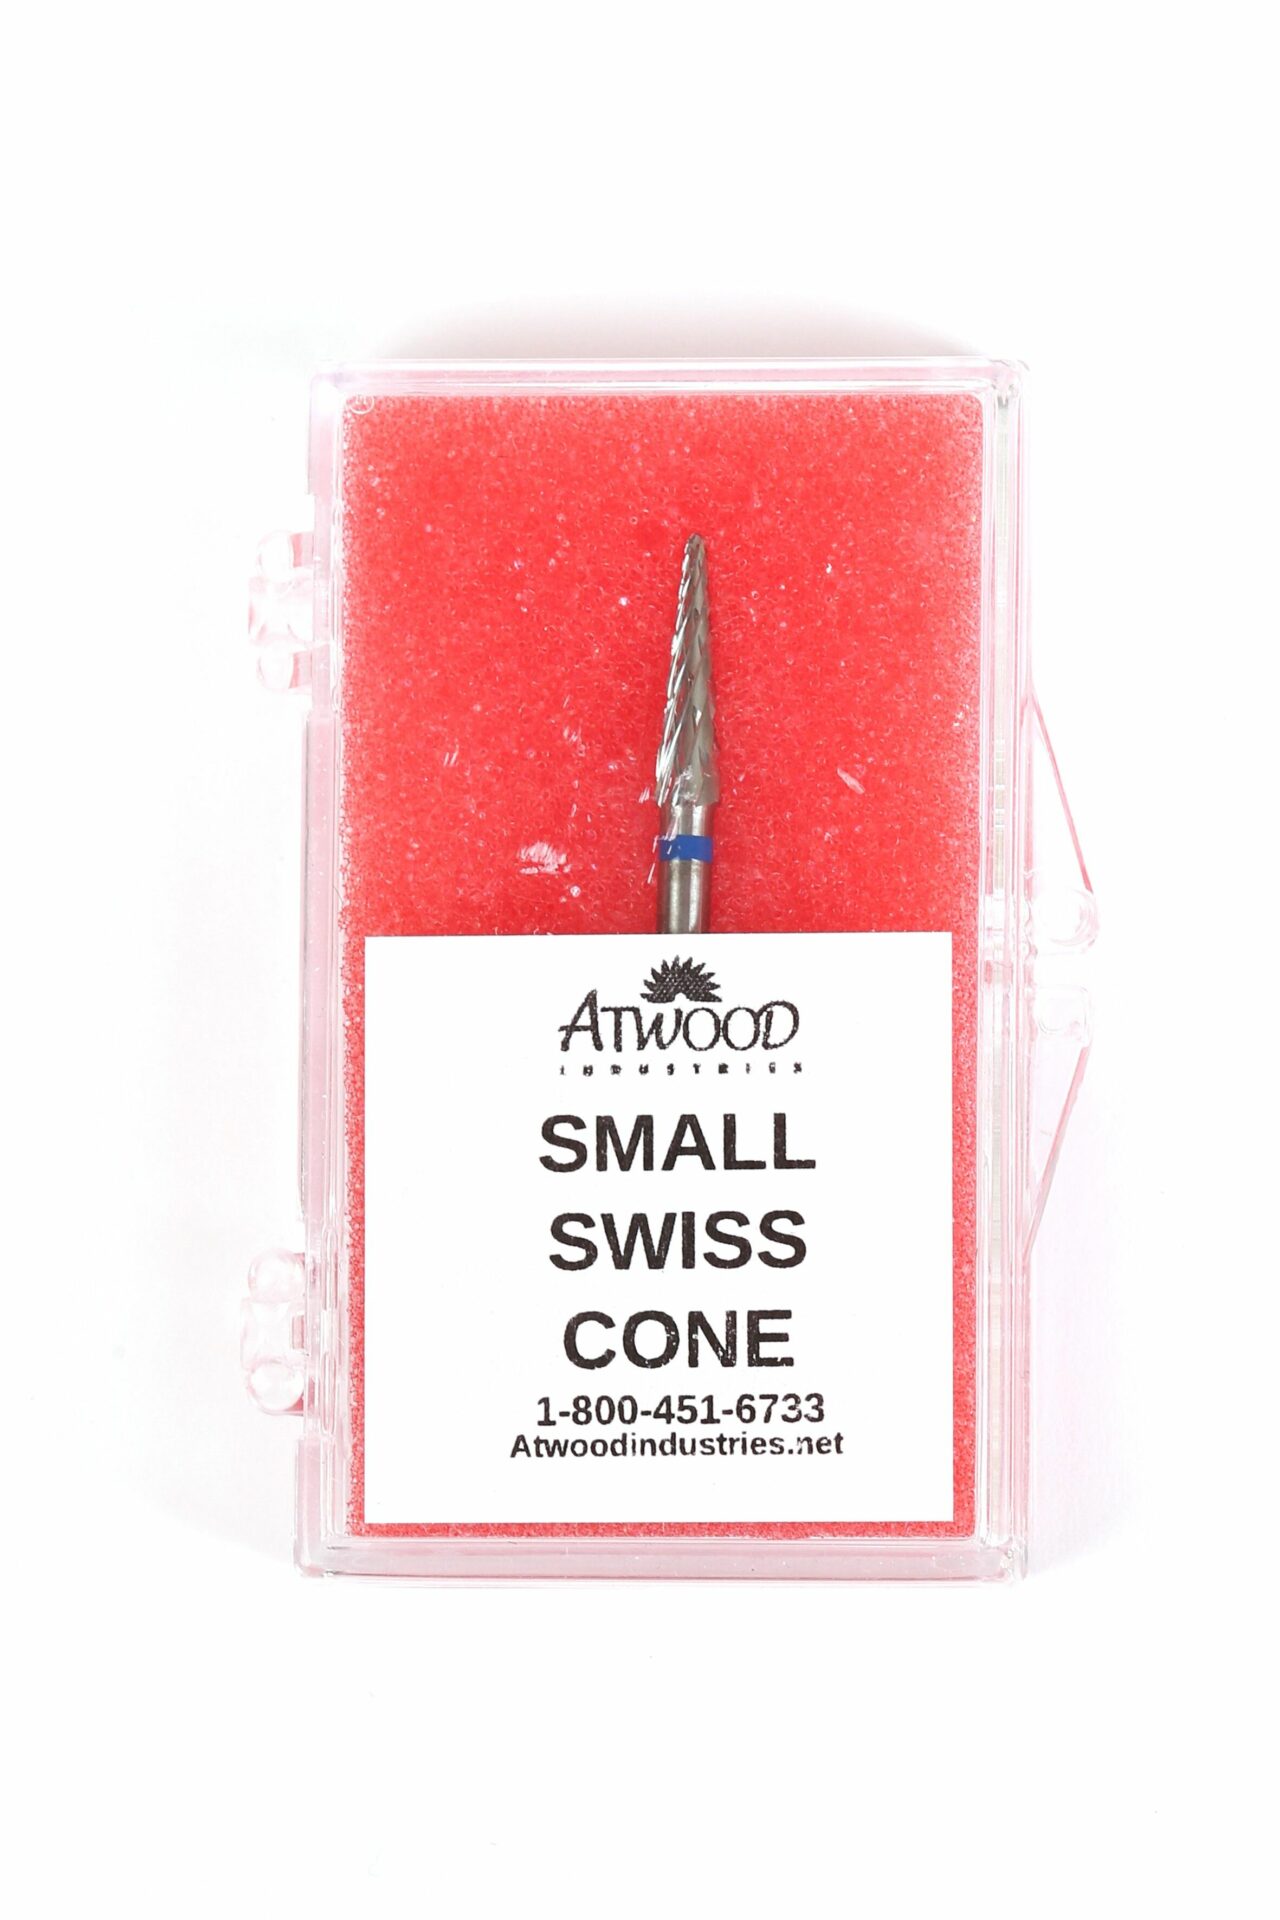 Freesbit Atwood Small Swiss Cone Medium Coarse Box